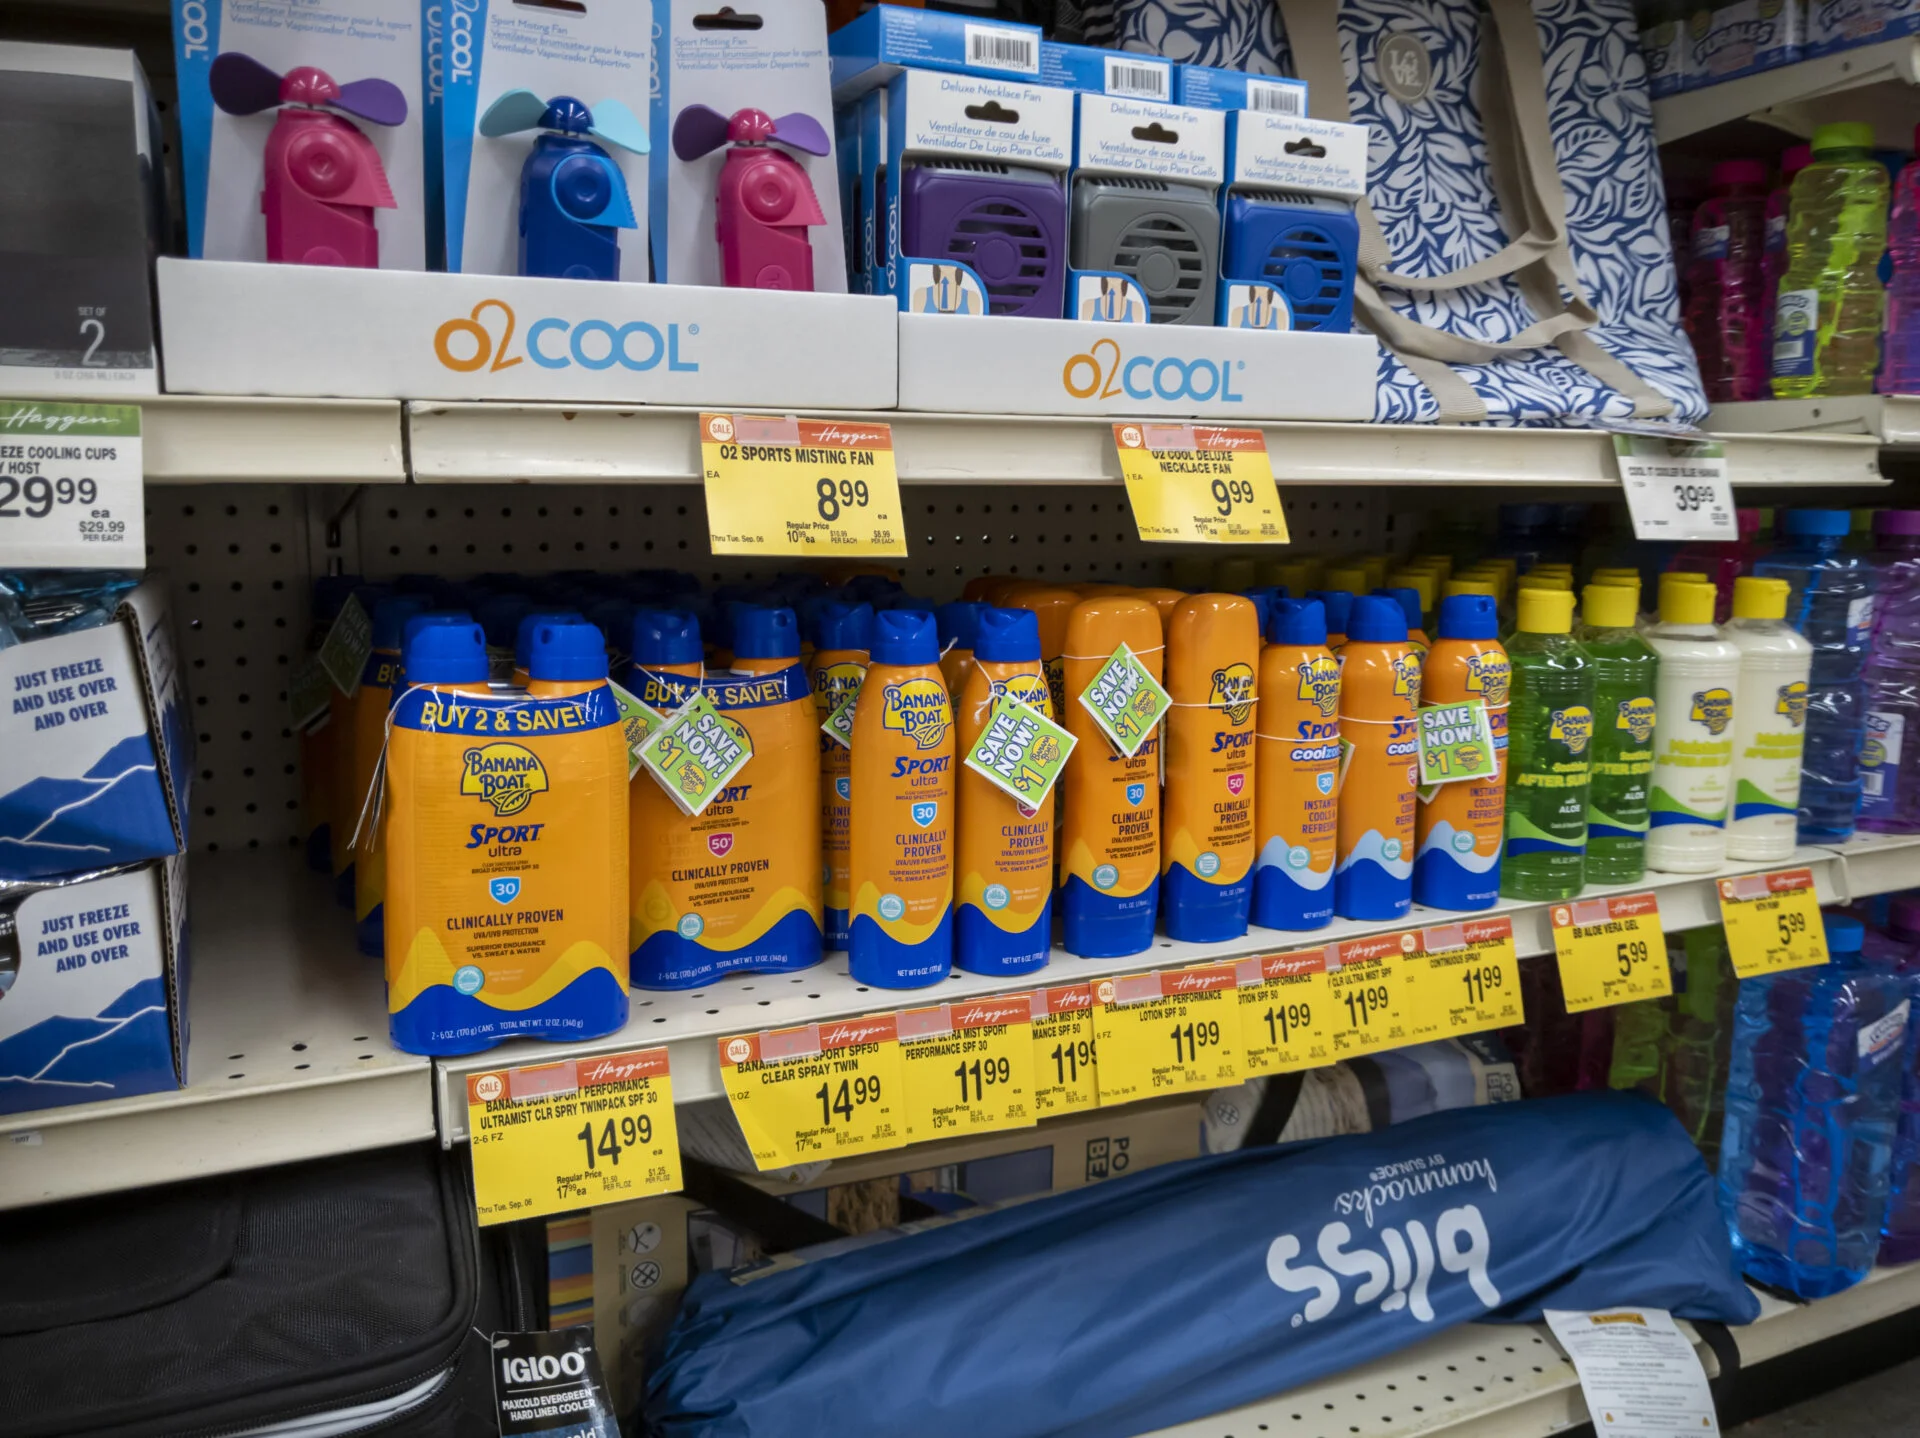 Banana Boat Sunscreen on the shelves leaking benzene into the formula